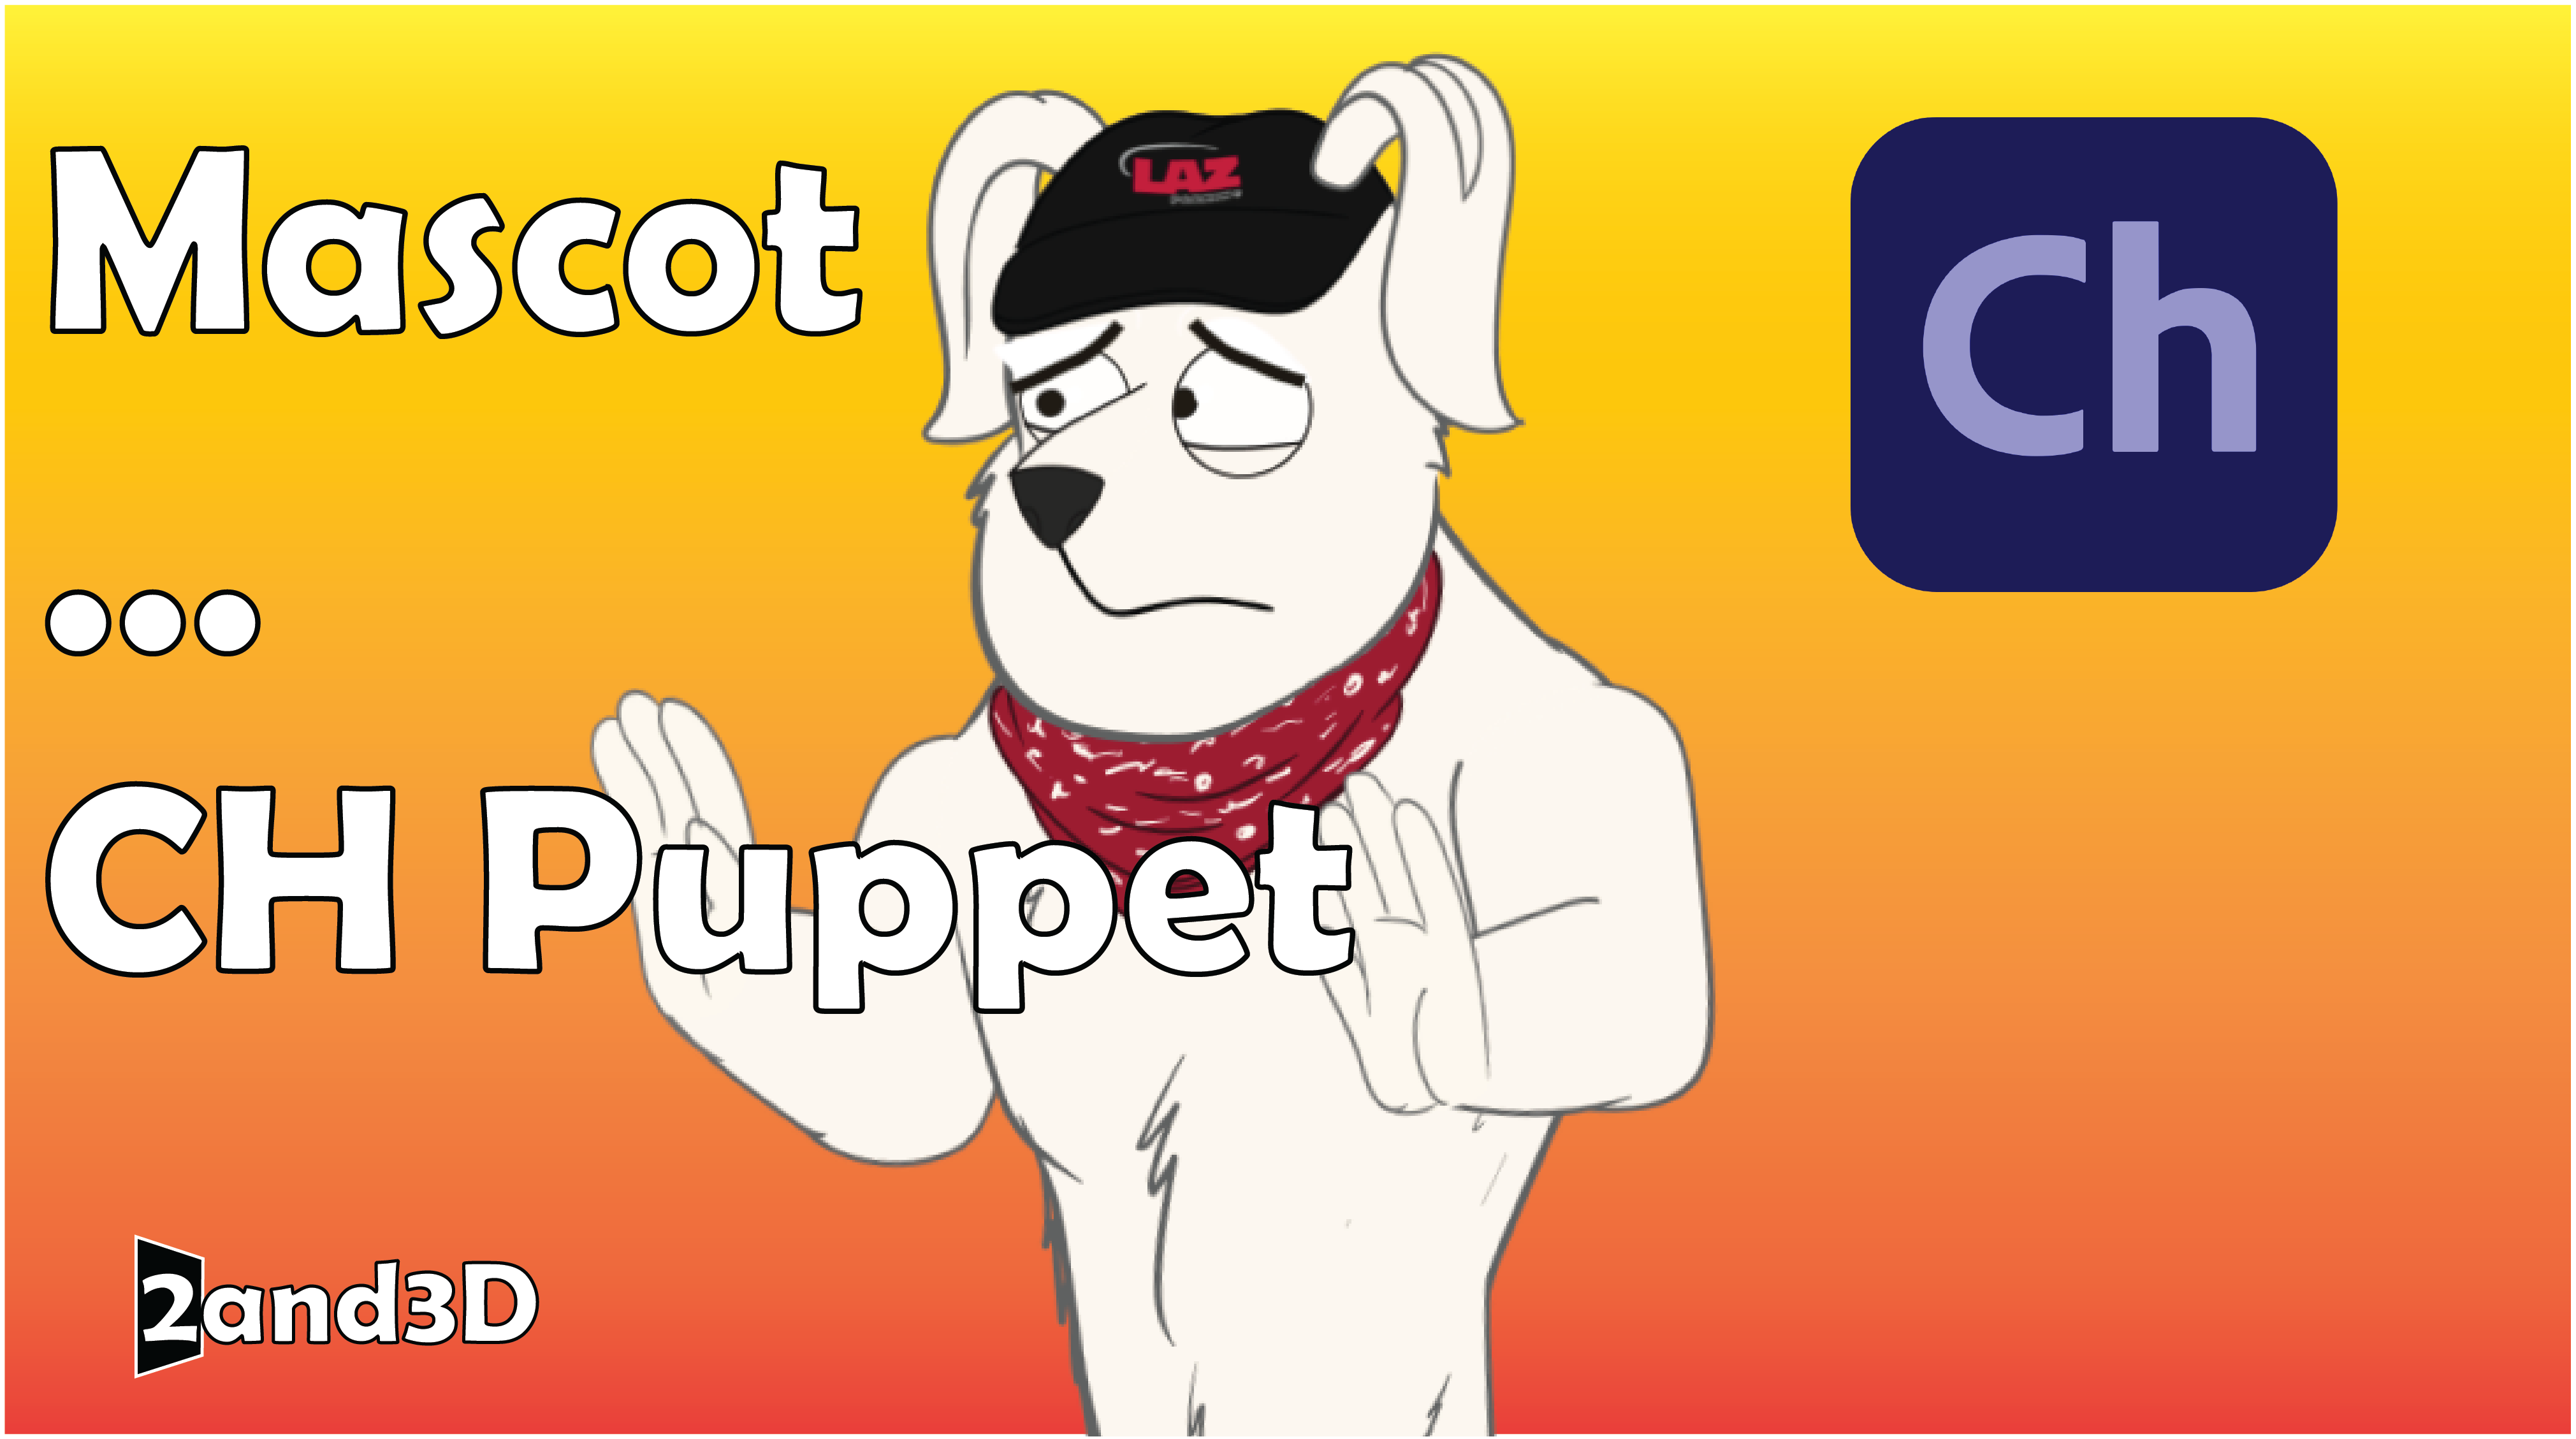 Mascot Adobe CH Puppet (Adobe Character Animator Puppet) Adobe Character Animator Puppet Adobe Ch Puppet